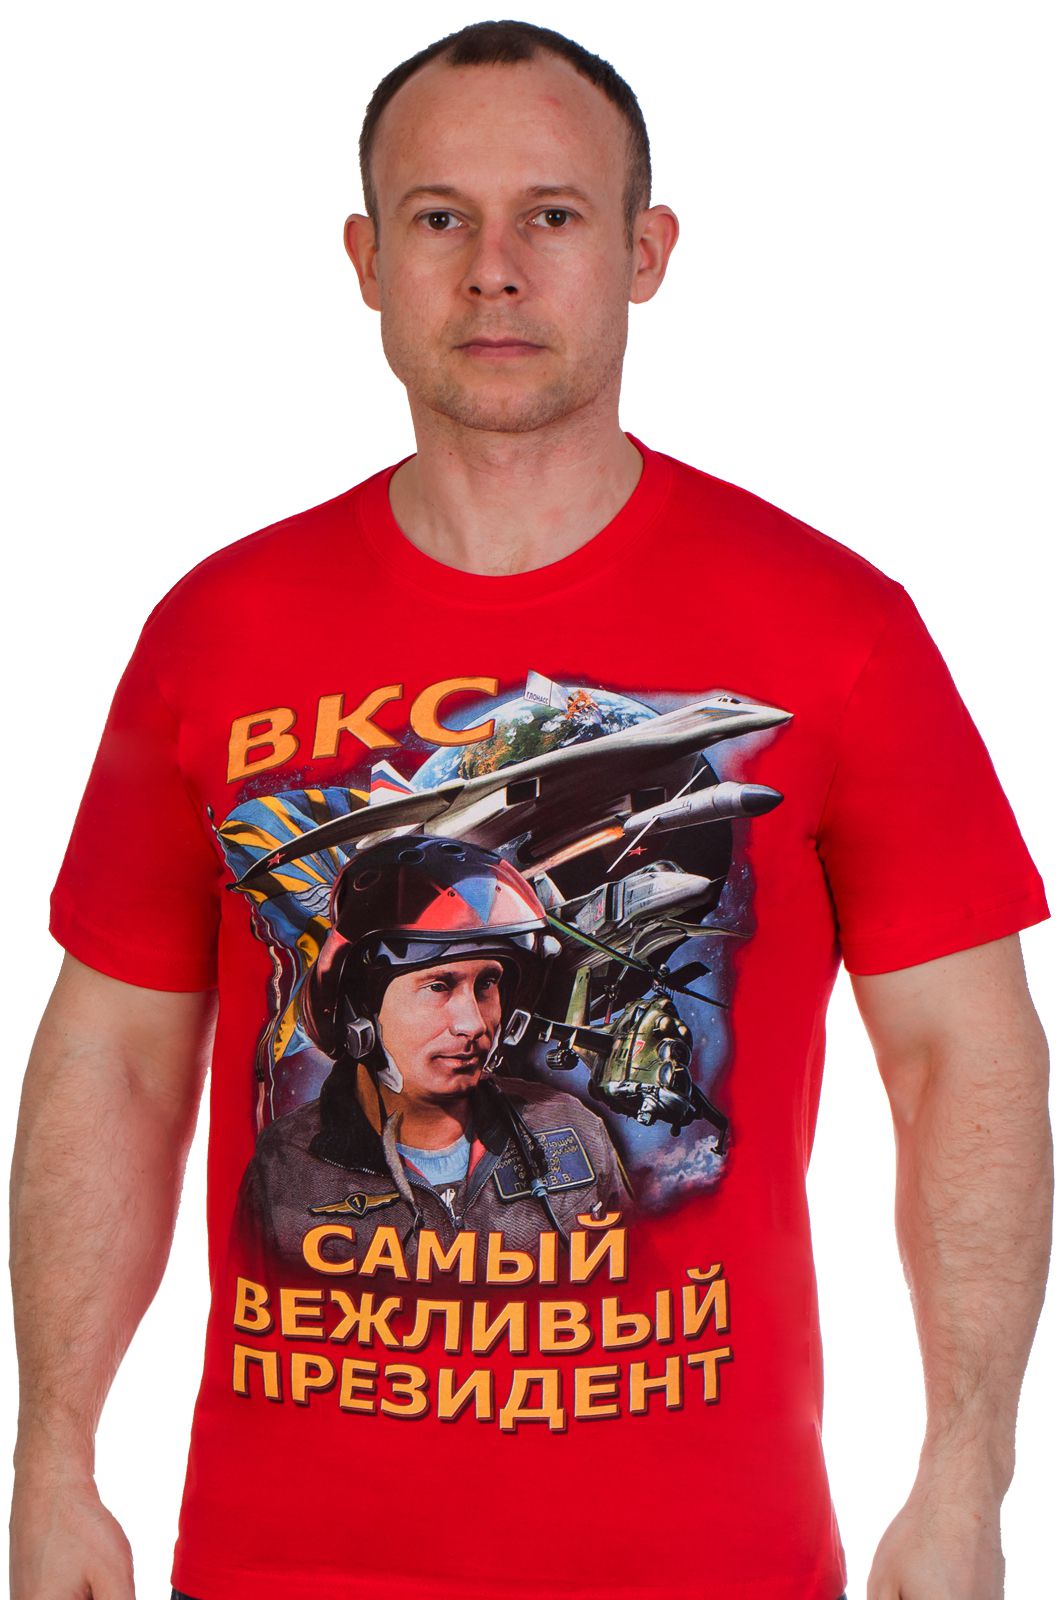 Армейская футболка ВКС с изображением президента России 